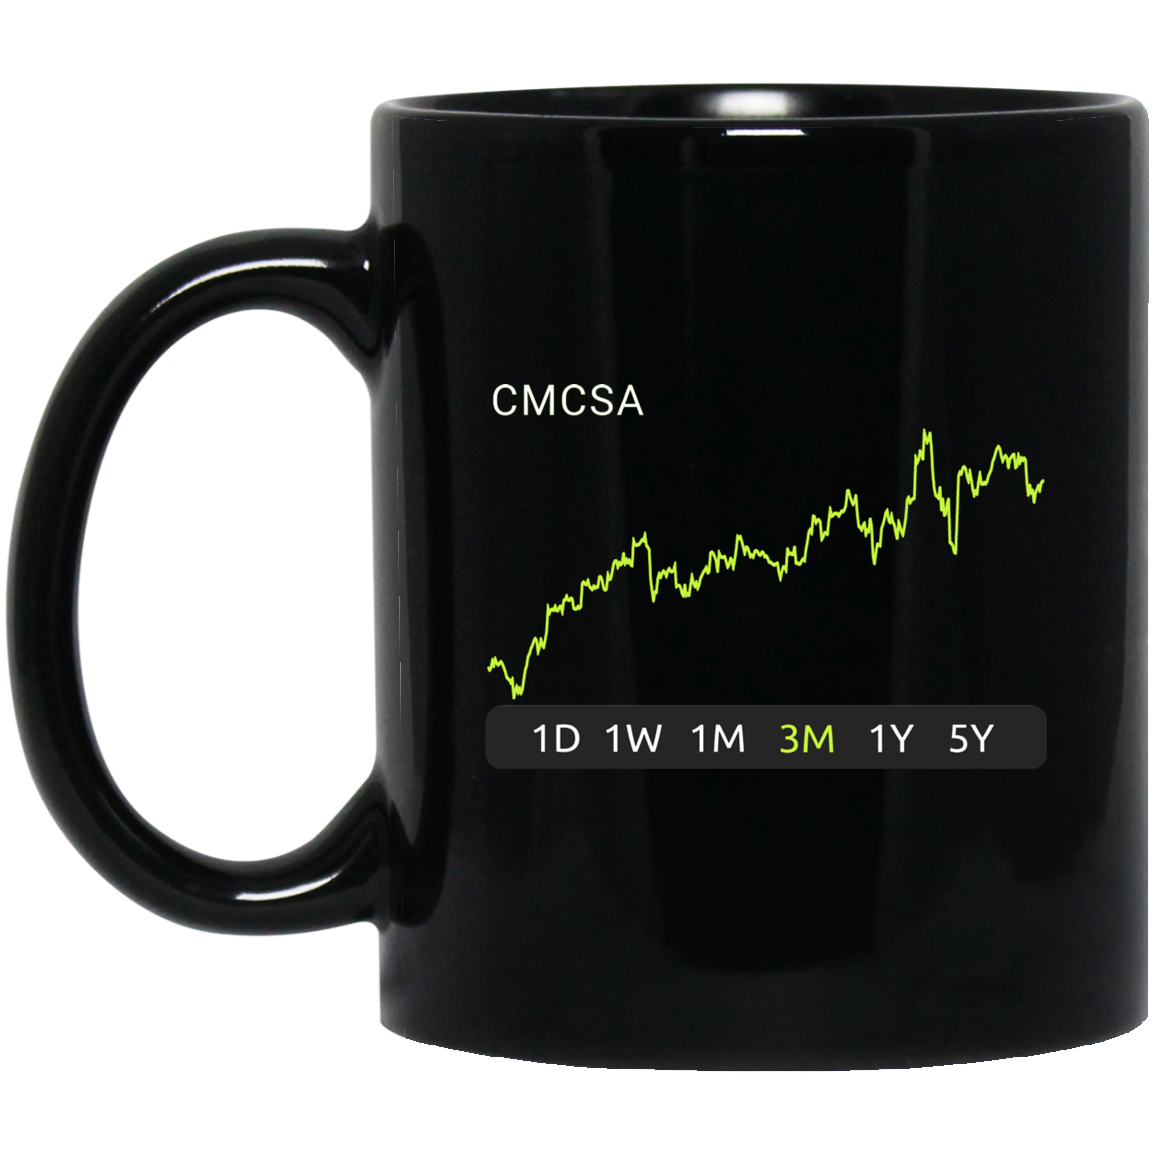 CMCSA Stock 3m Mug